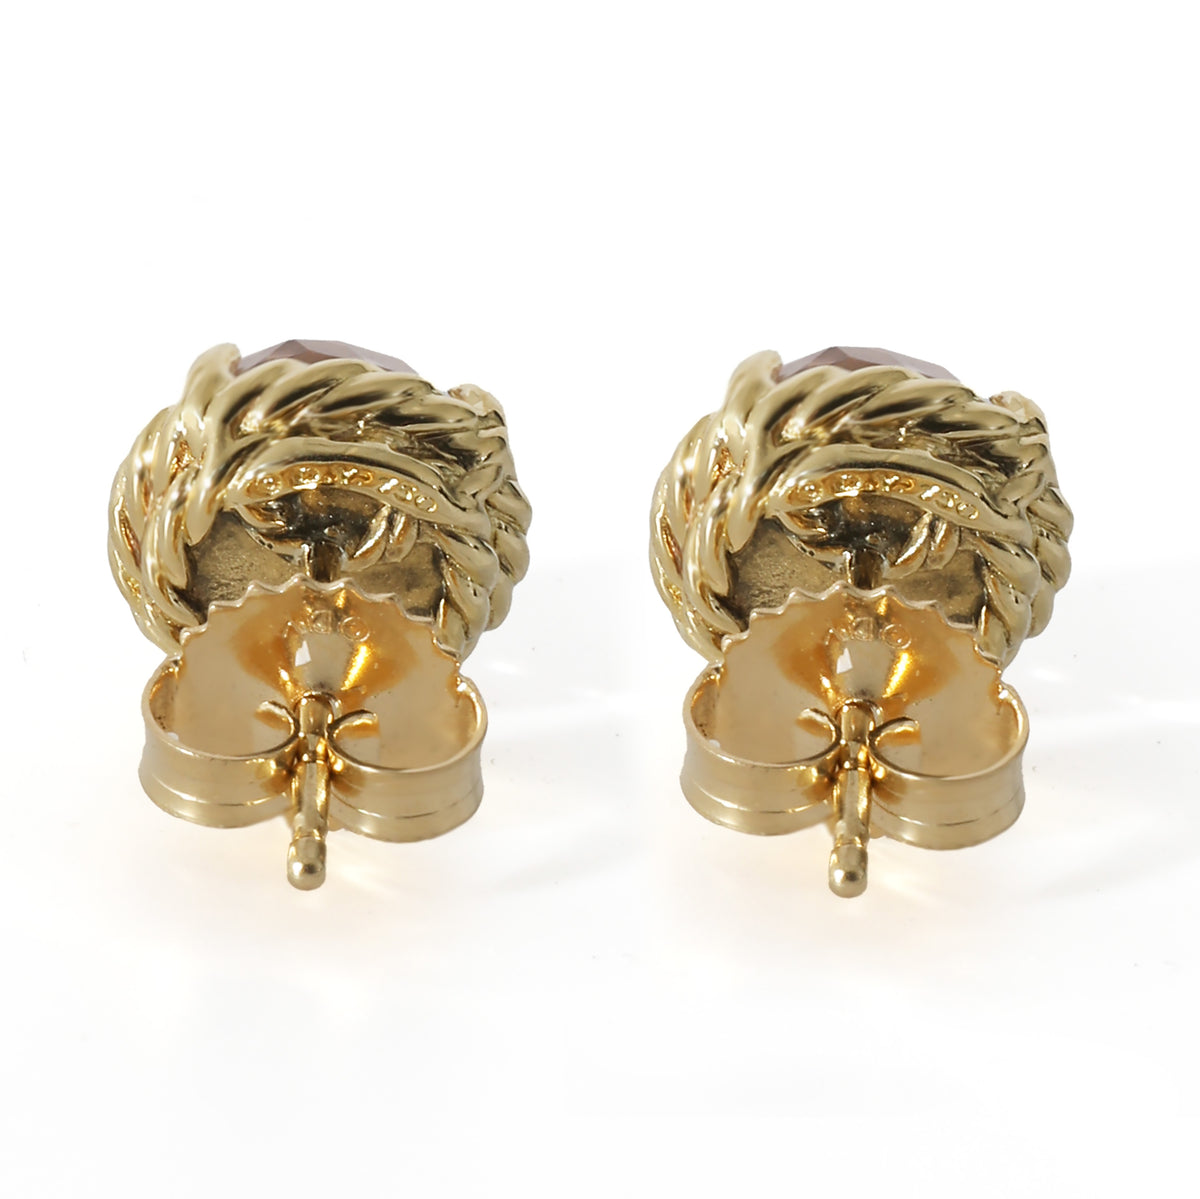 David Yurman Earrings in 18K Yellow Gold